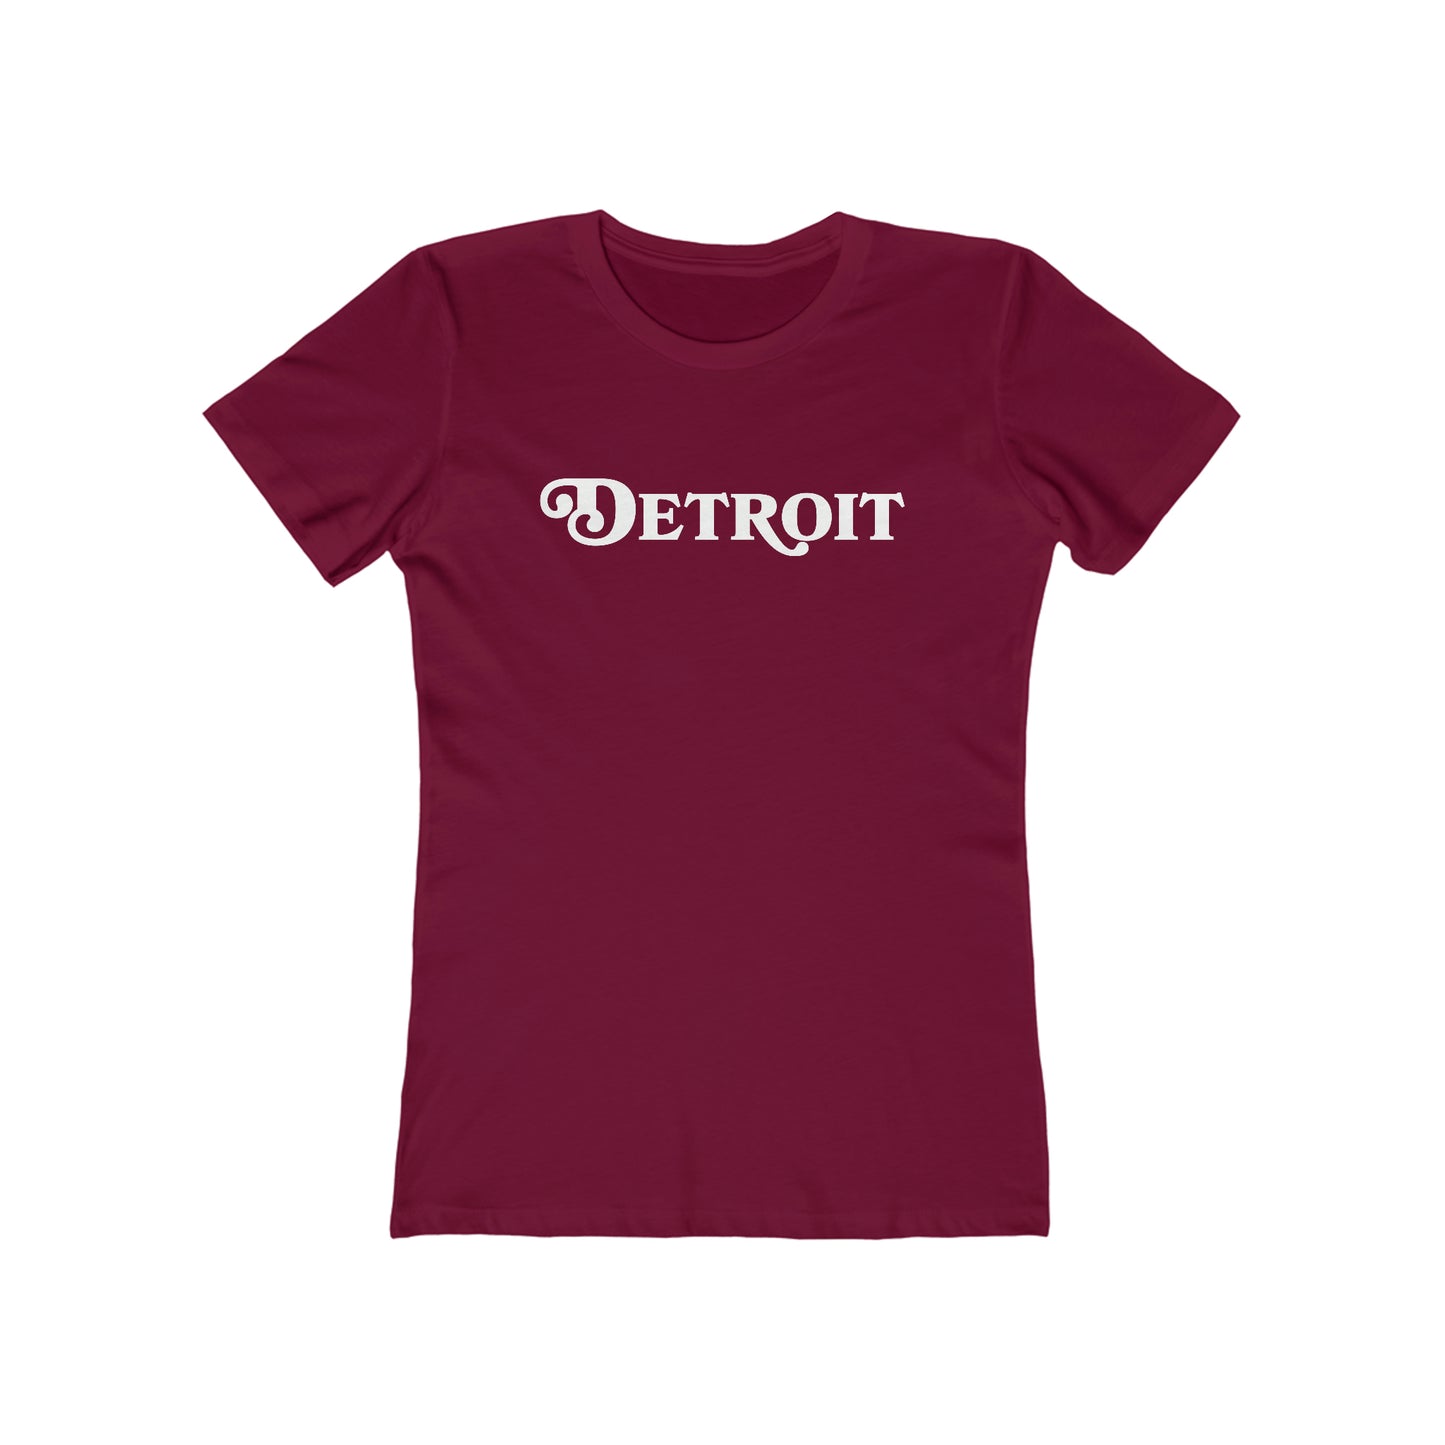 'Detroit' T-Shirt (Sloped Roman Font) | Women's Boyfriend Cut